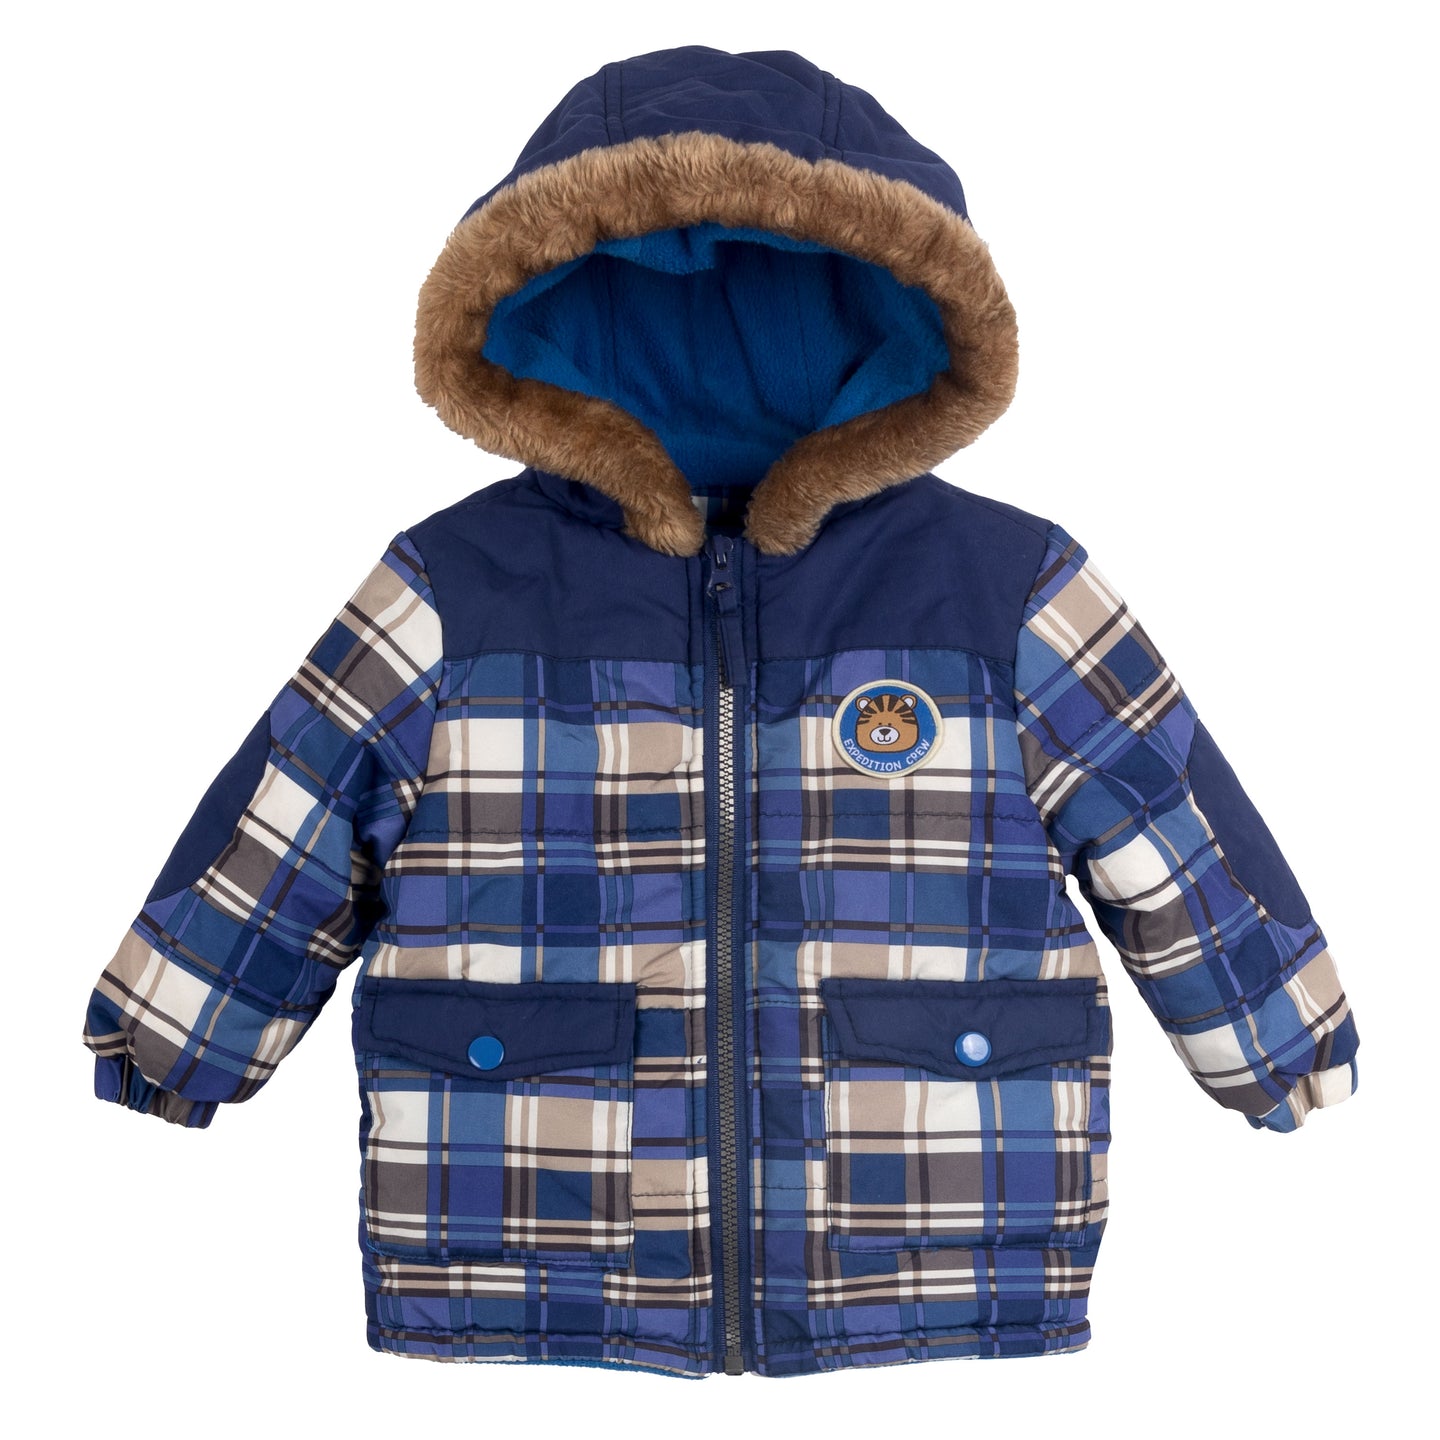 [18m] Wippette Baby Coluorblock Warm Jacket